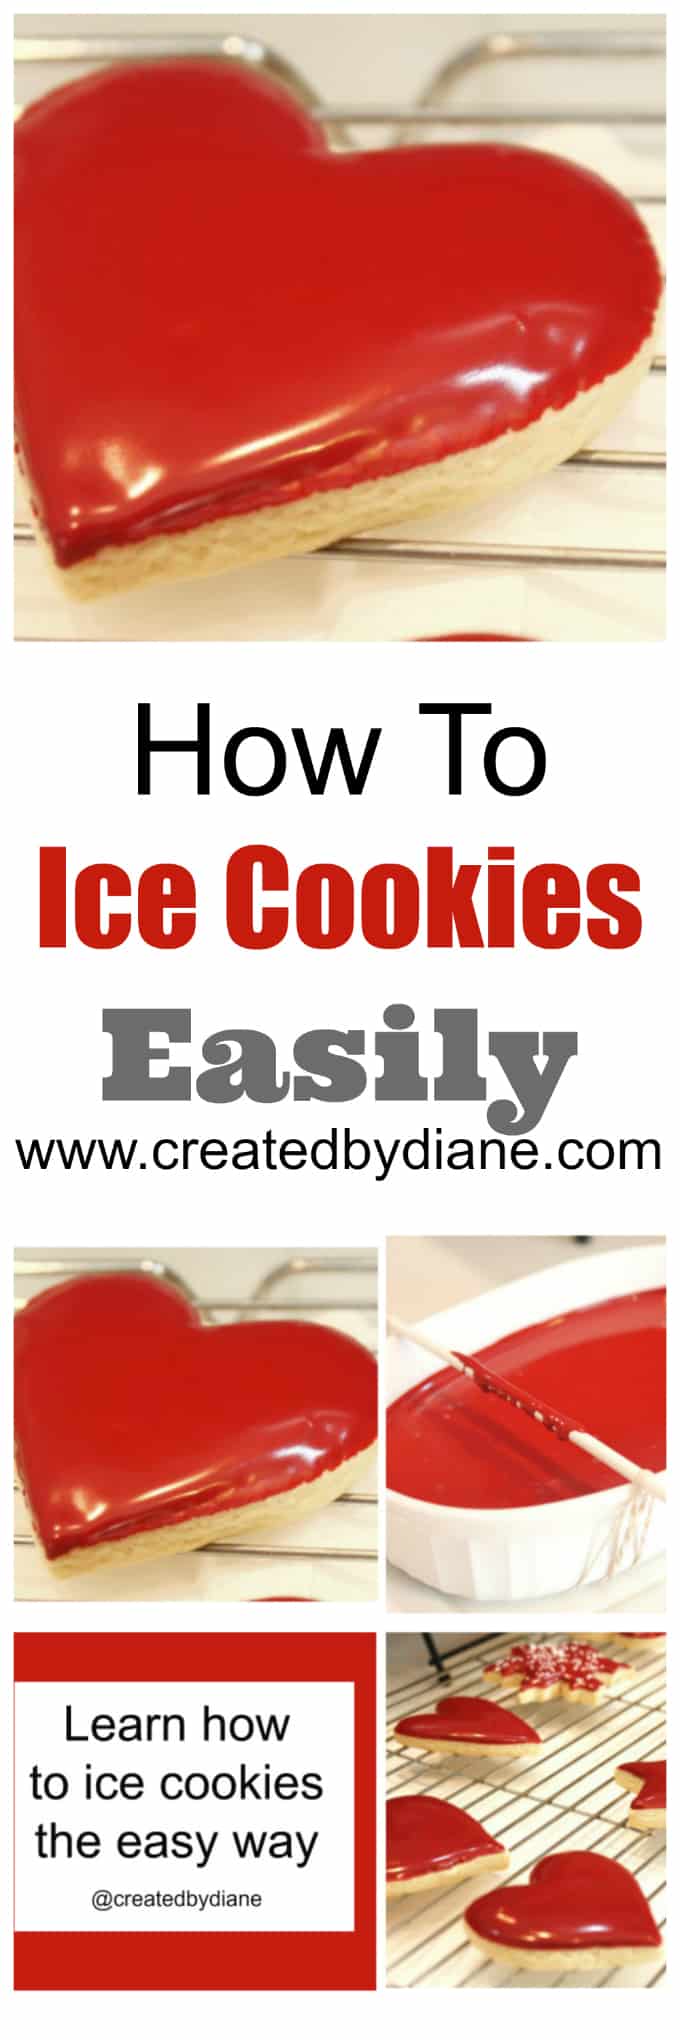 decorated cookies, christmas cookies, icing cookies, How to ice cookies easily www.createdbydiane.com